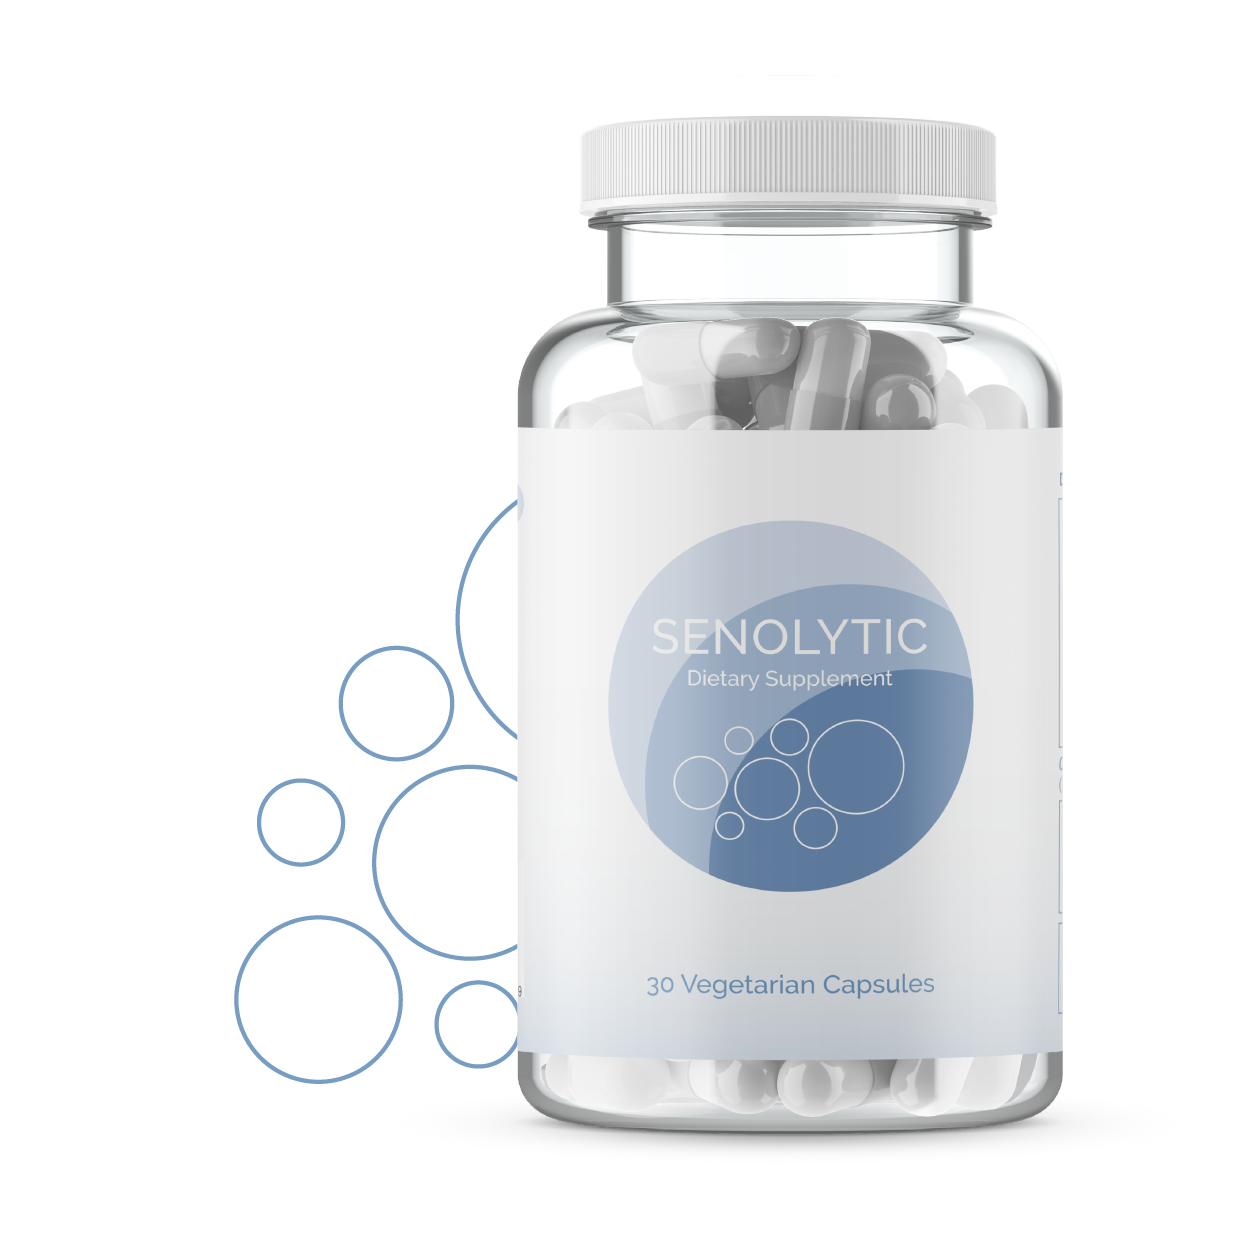 Senolytic - Healthy Aging Support